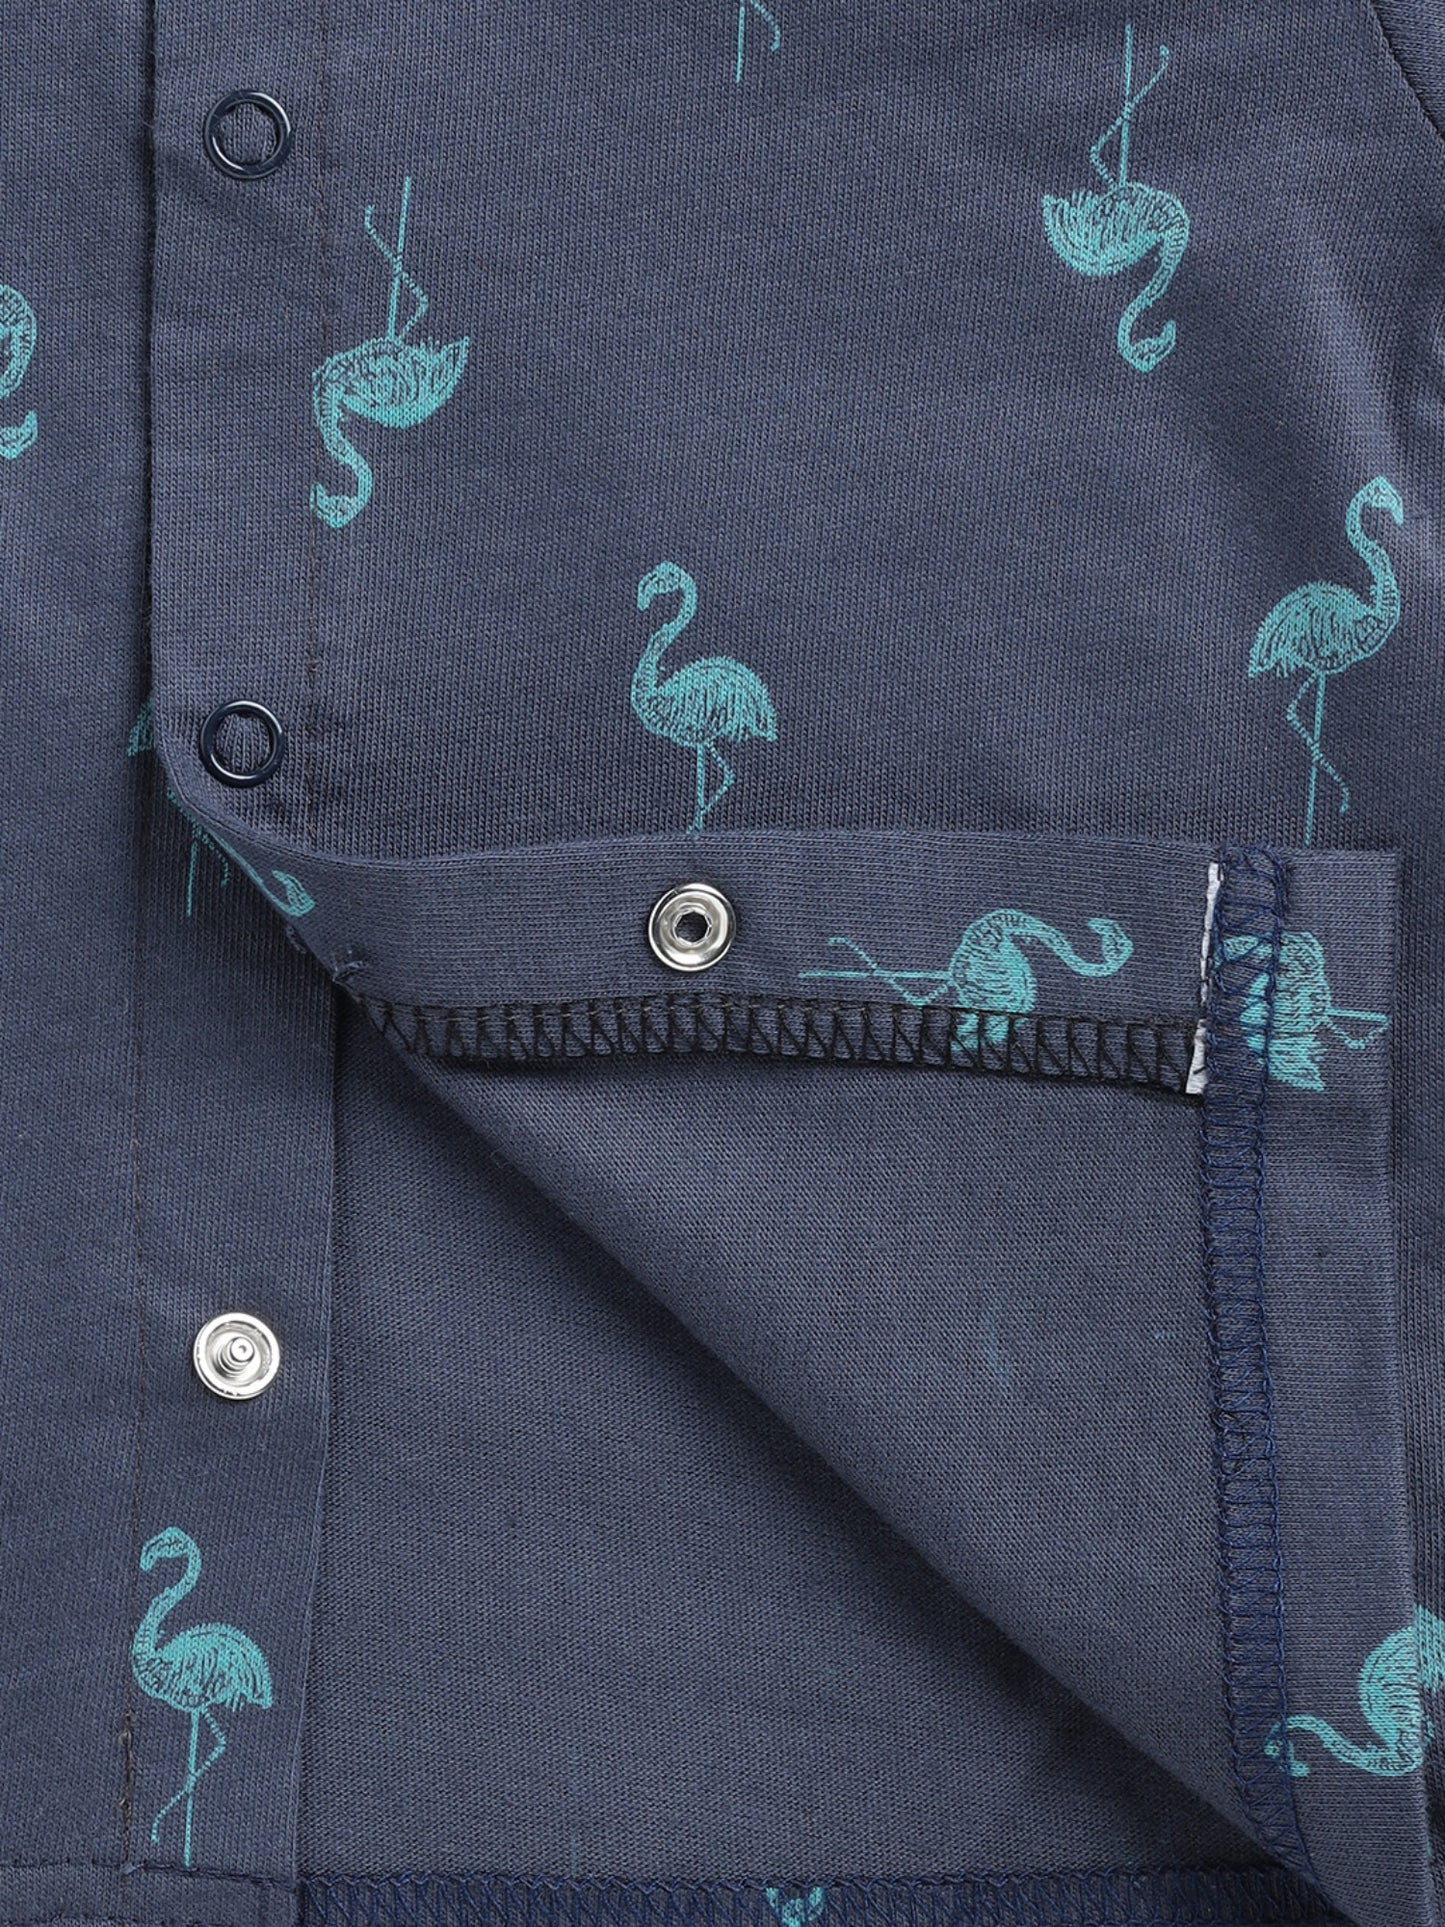 Flamingo Print Blue Cotton Full Sleeve Nightwear Set